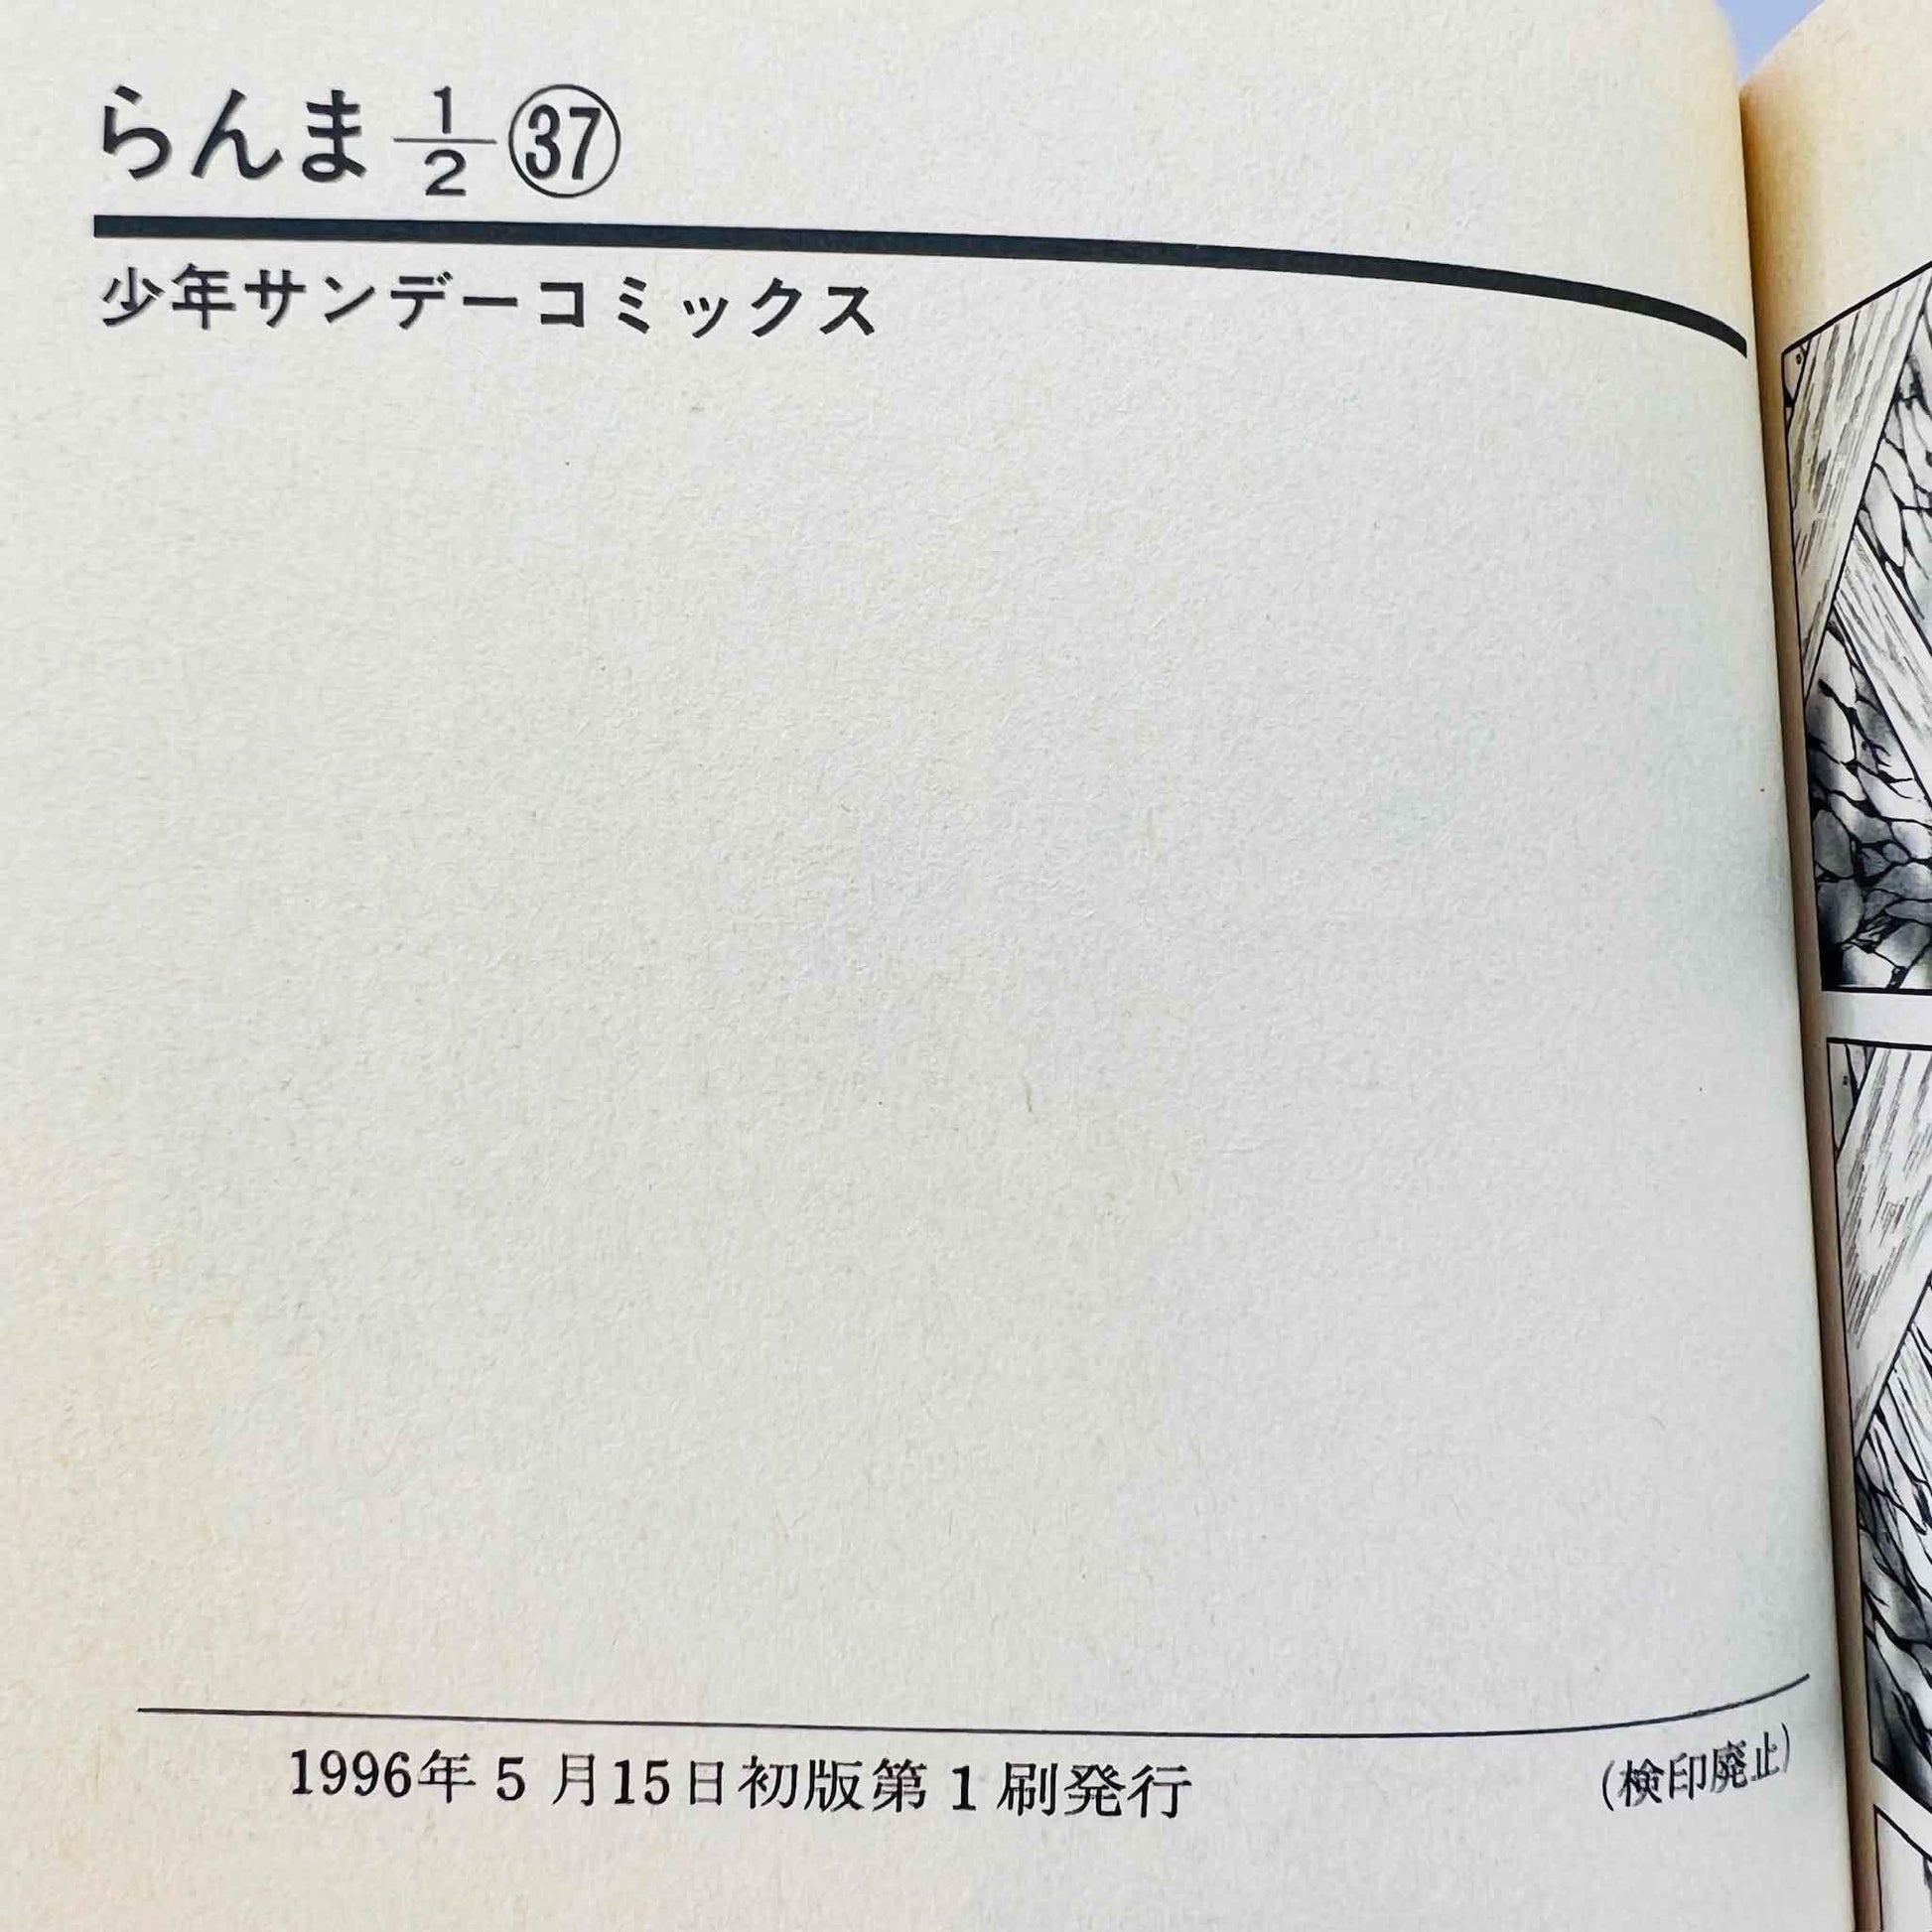 Ranma ½ - Volume 37 - 1stPrint.net - 1st First Print Edition Manga Store - M-RANMA-37-001